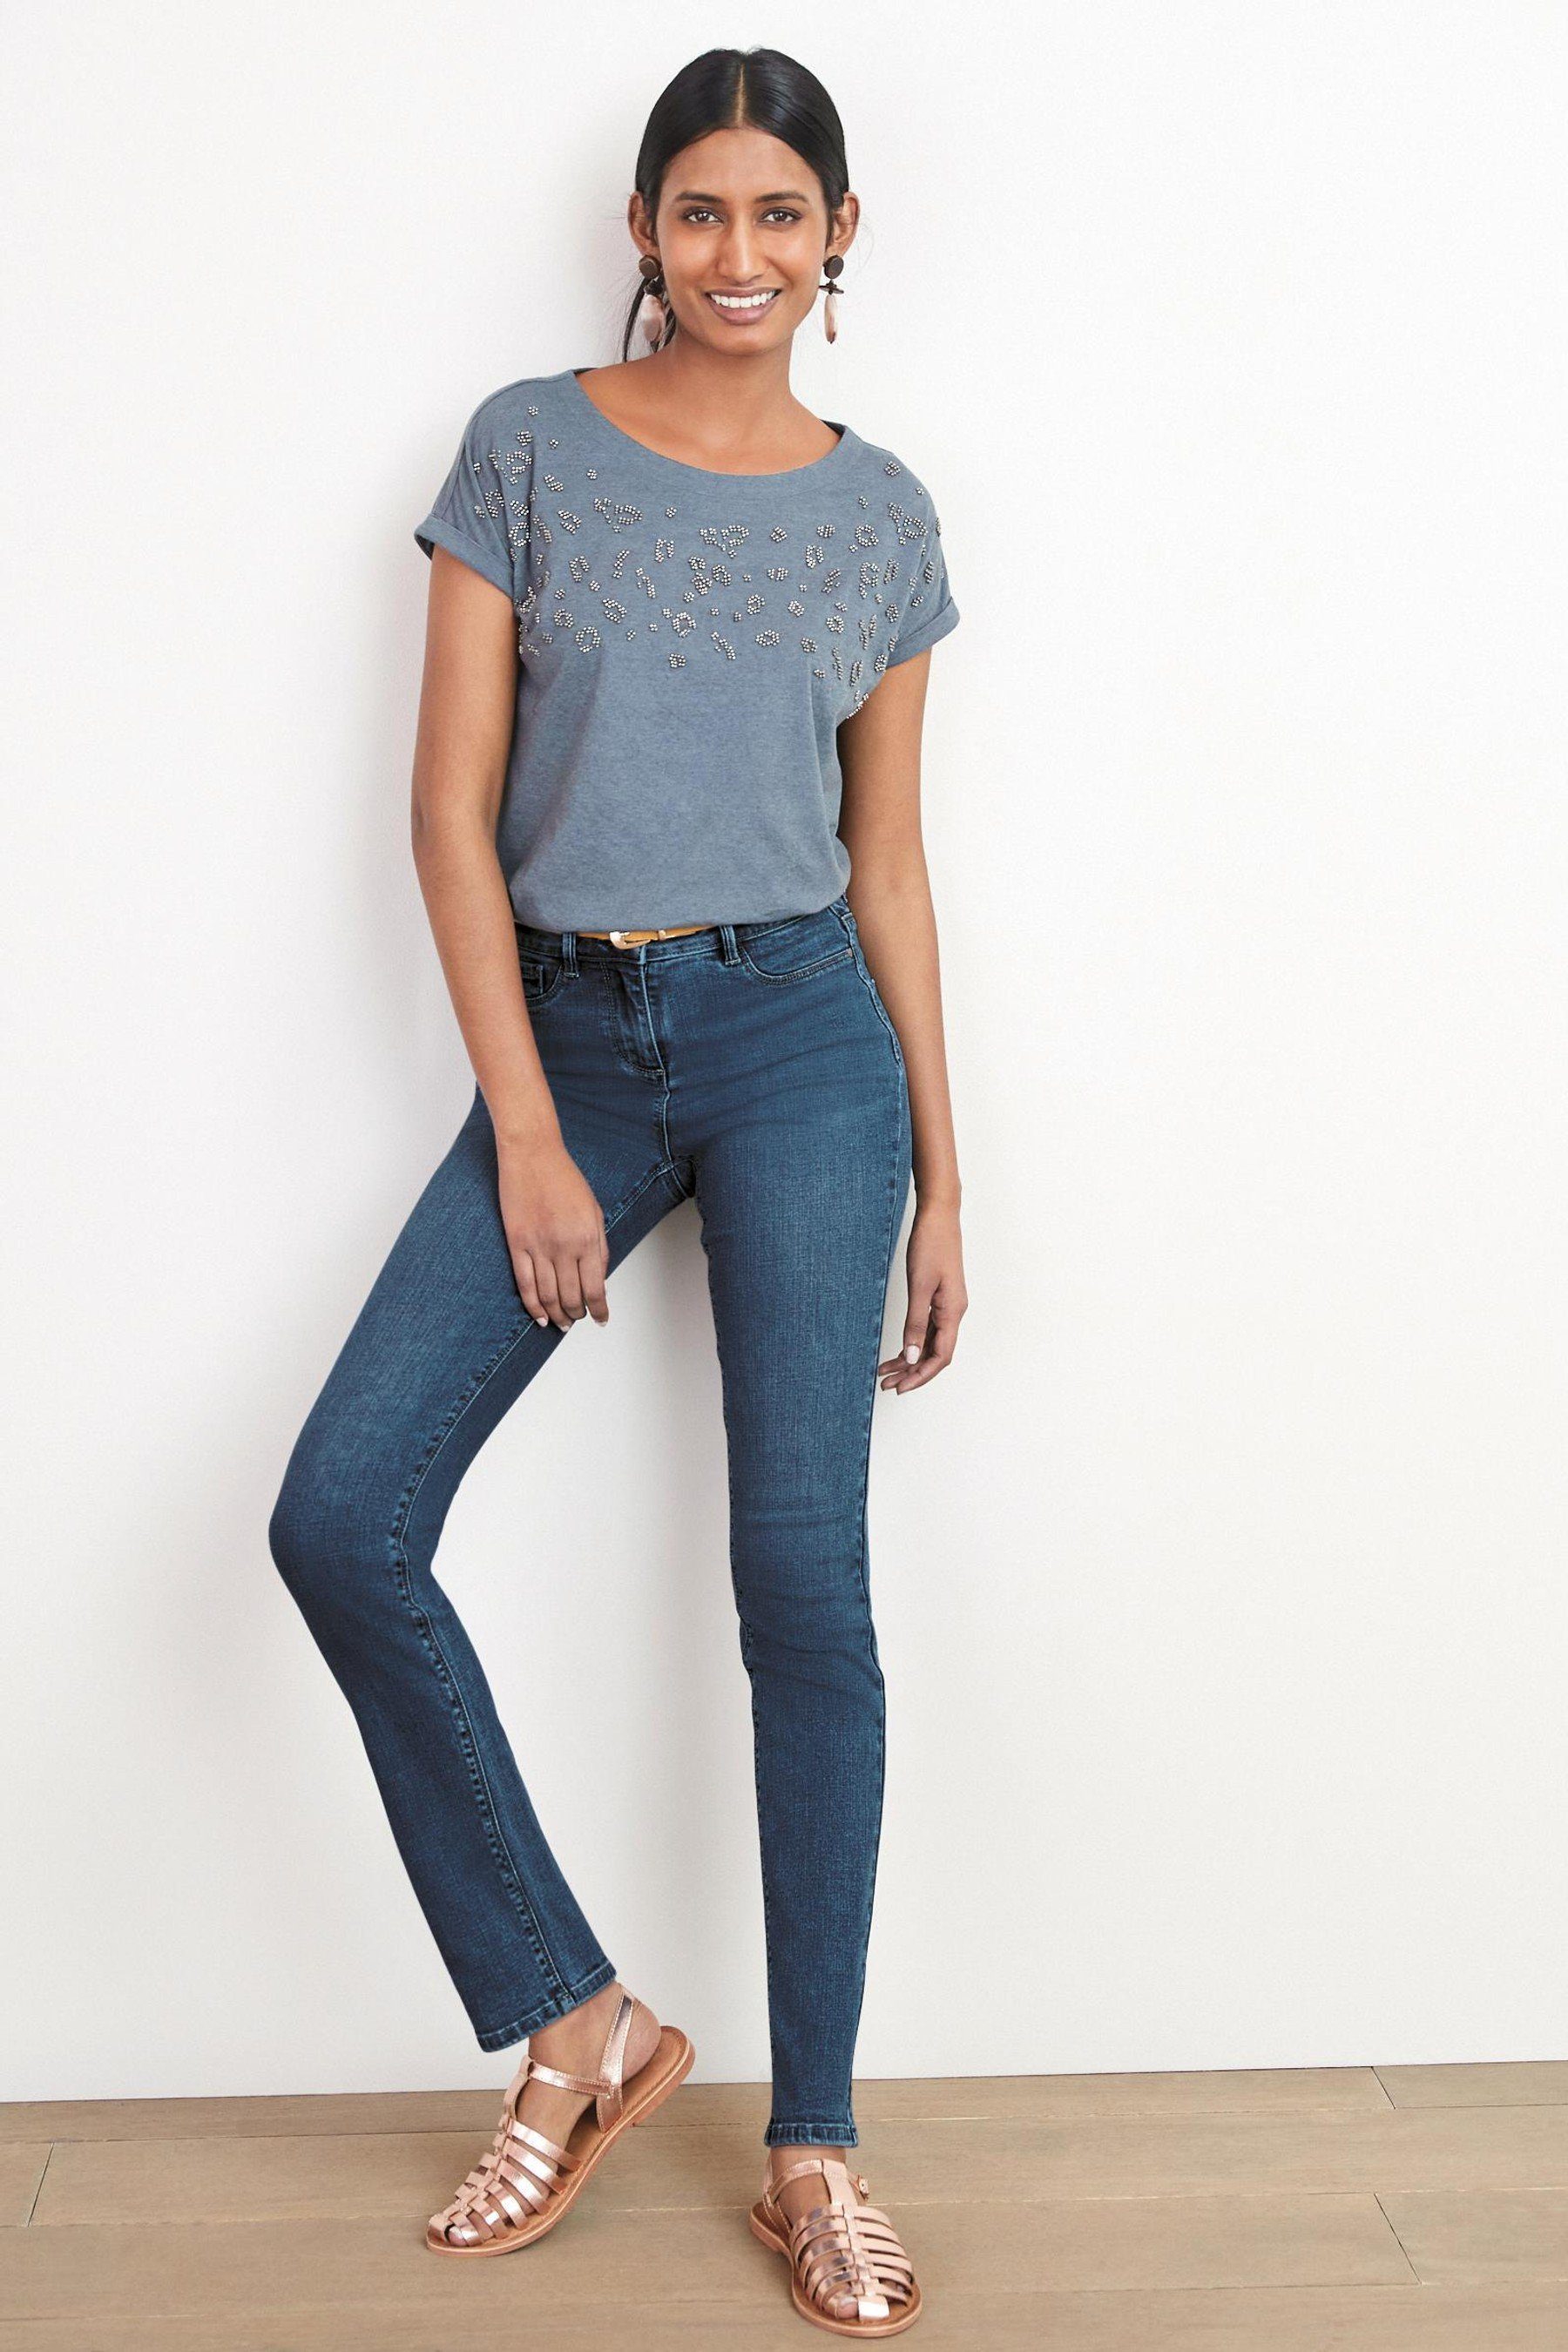 Damen Jeans Next Slim-fit-Jeans Schmal geschnittene Power-Stretch-Jeans